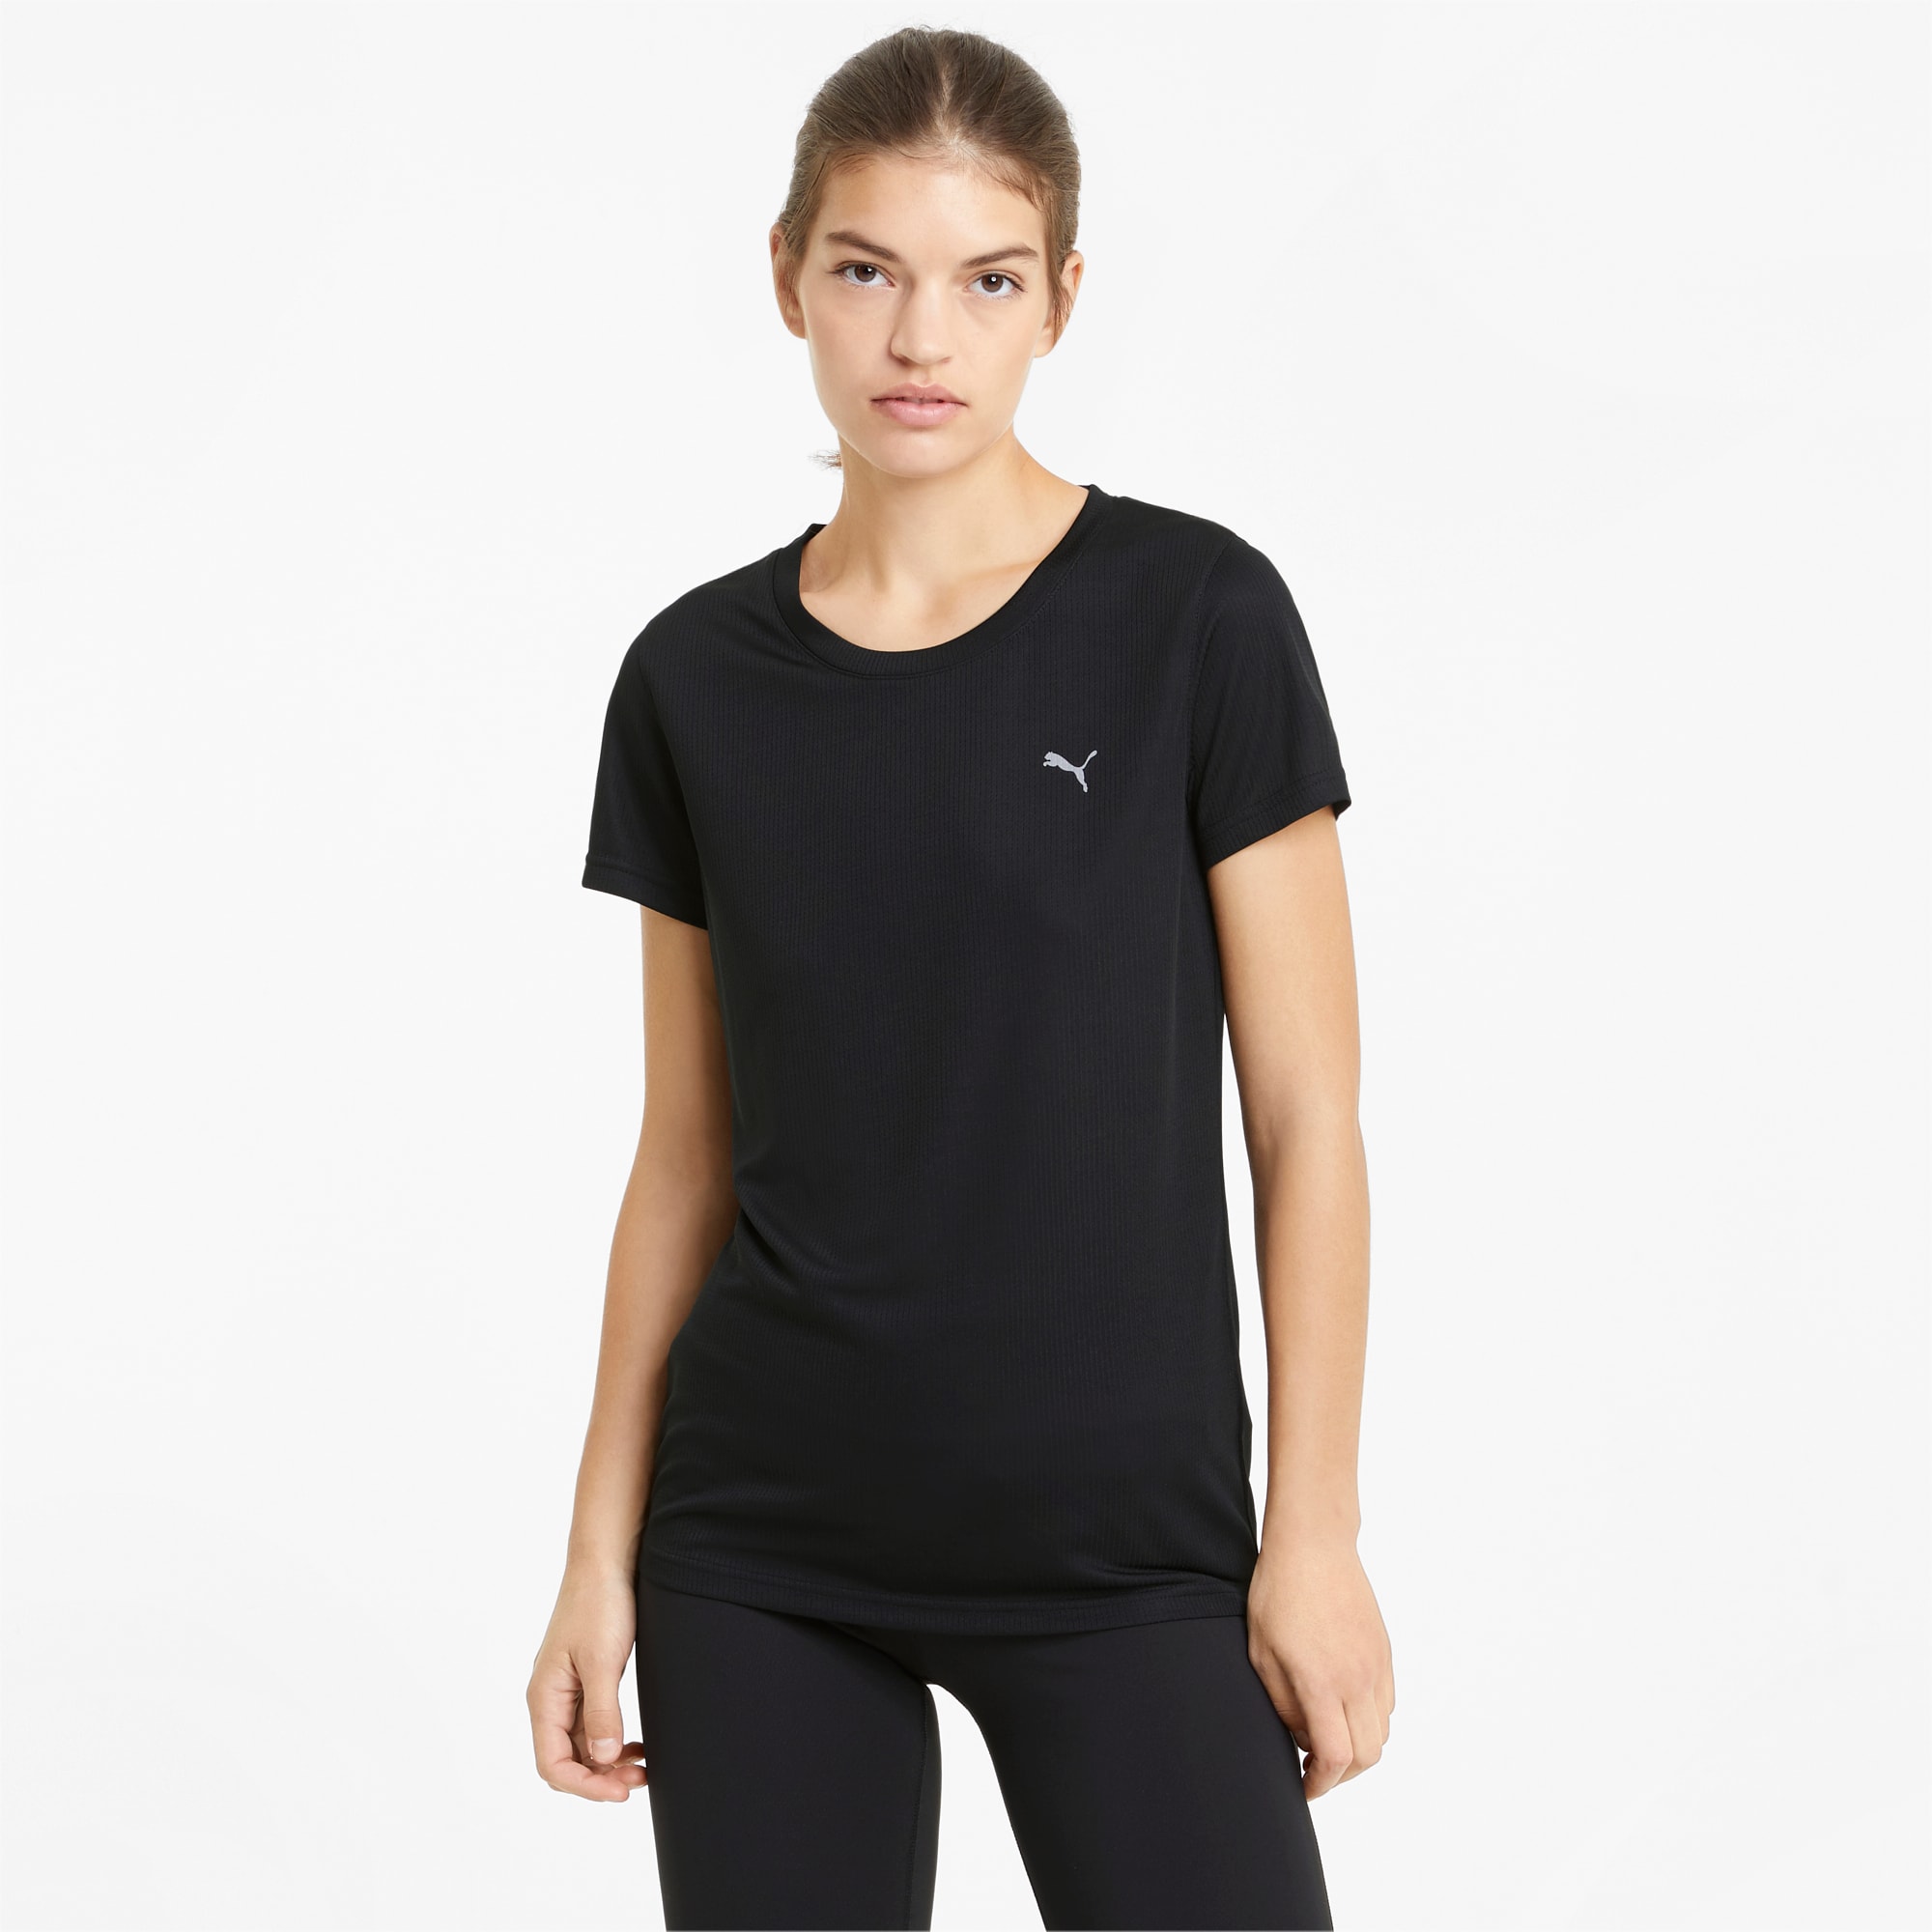 PUMA Performance Women's Training T-Shirt, Black, Size M, Clothing